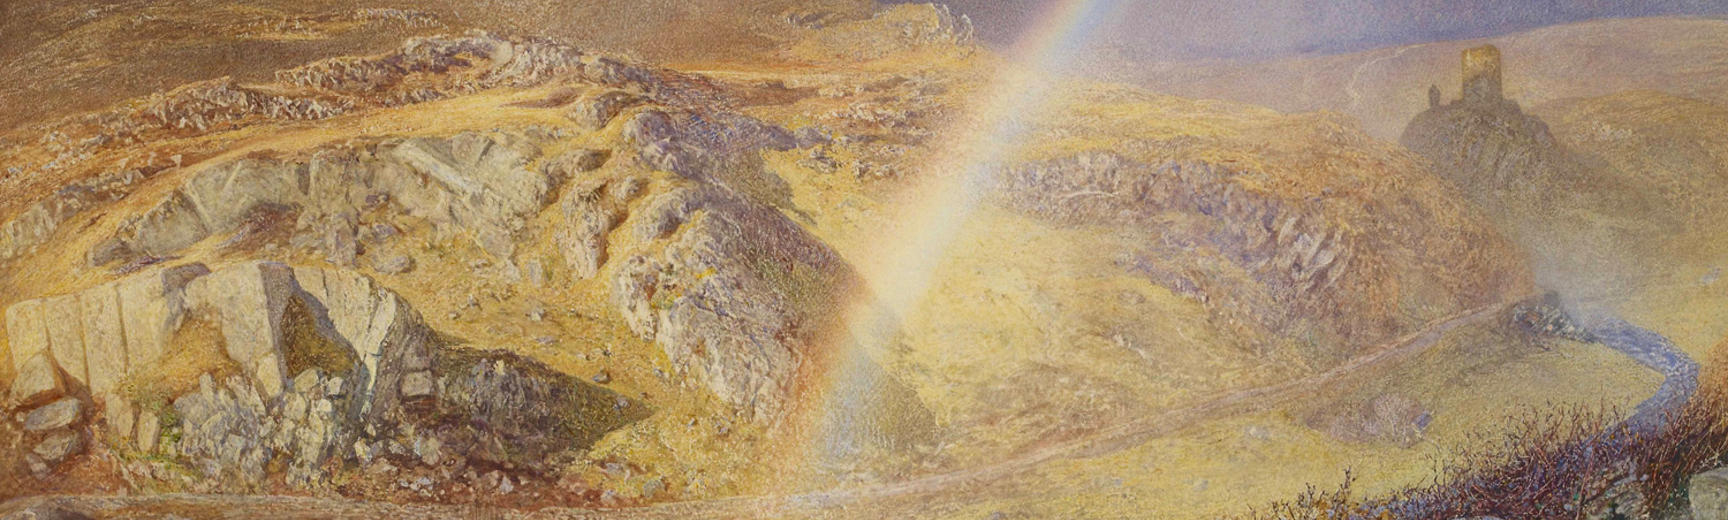 Alfred William Hunt, A November Rainbow, Dolwyddelan Valley, November 11, 1866, 1 p.m. 1866